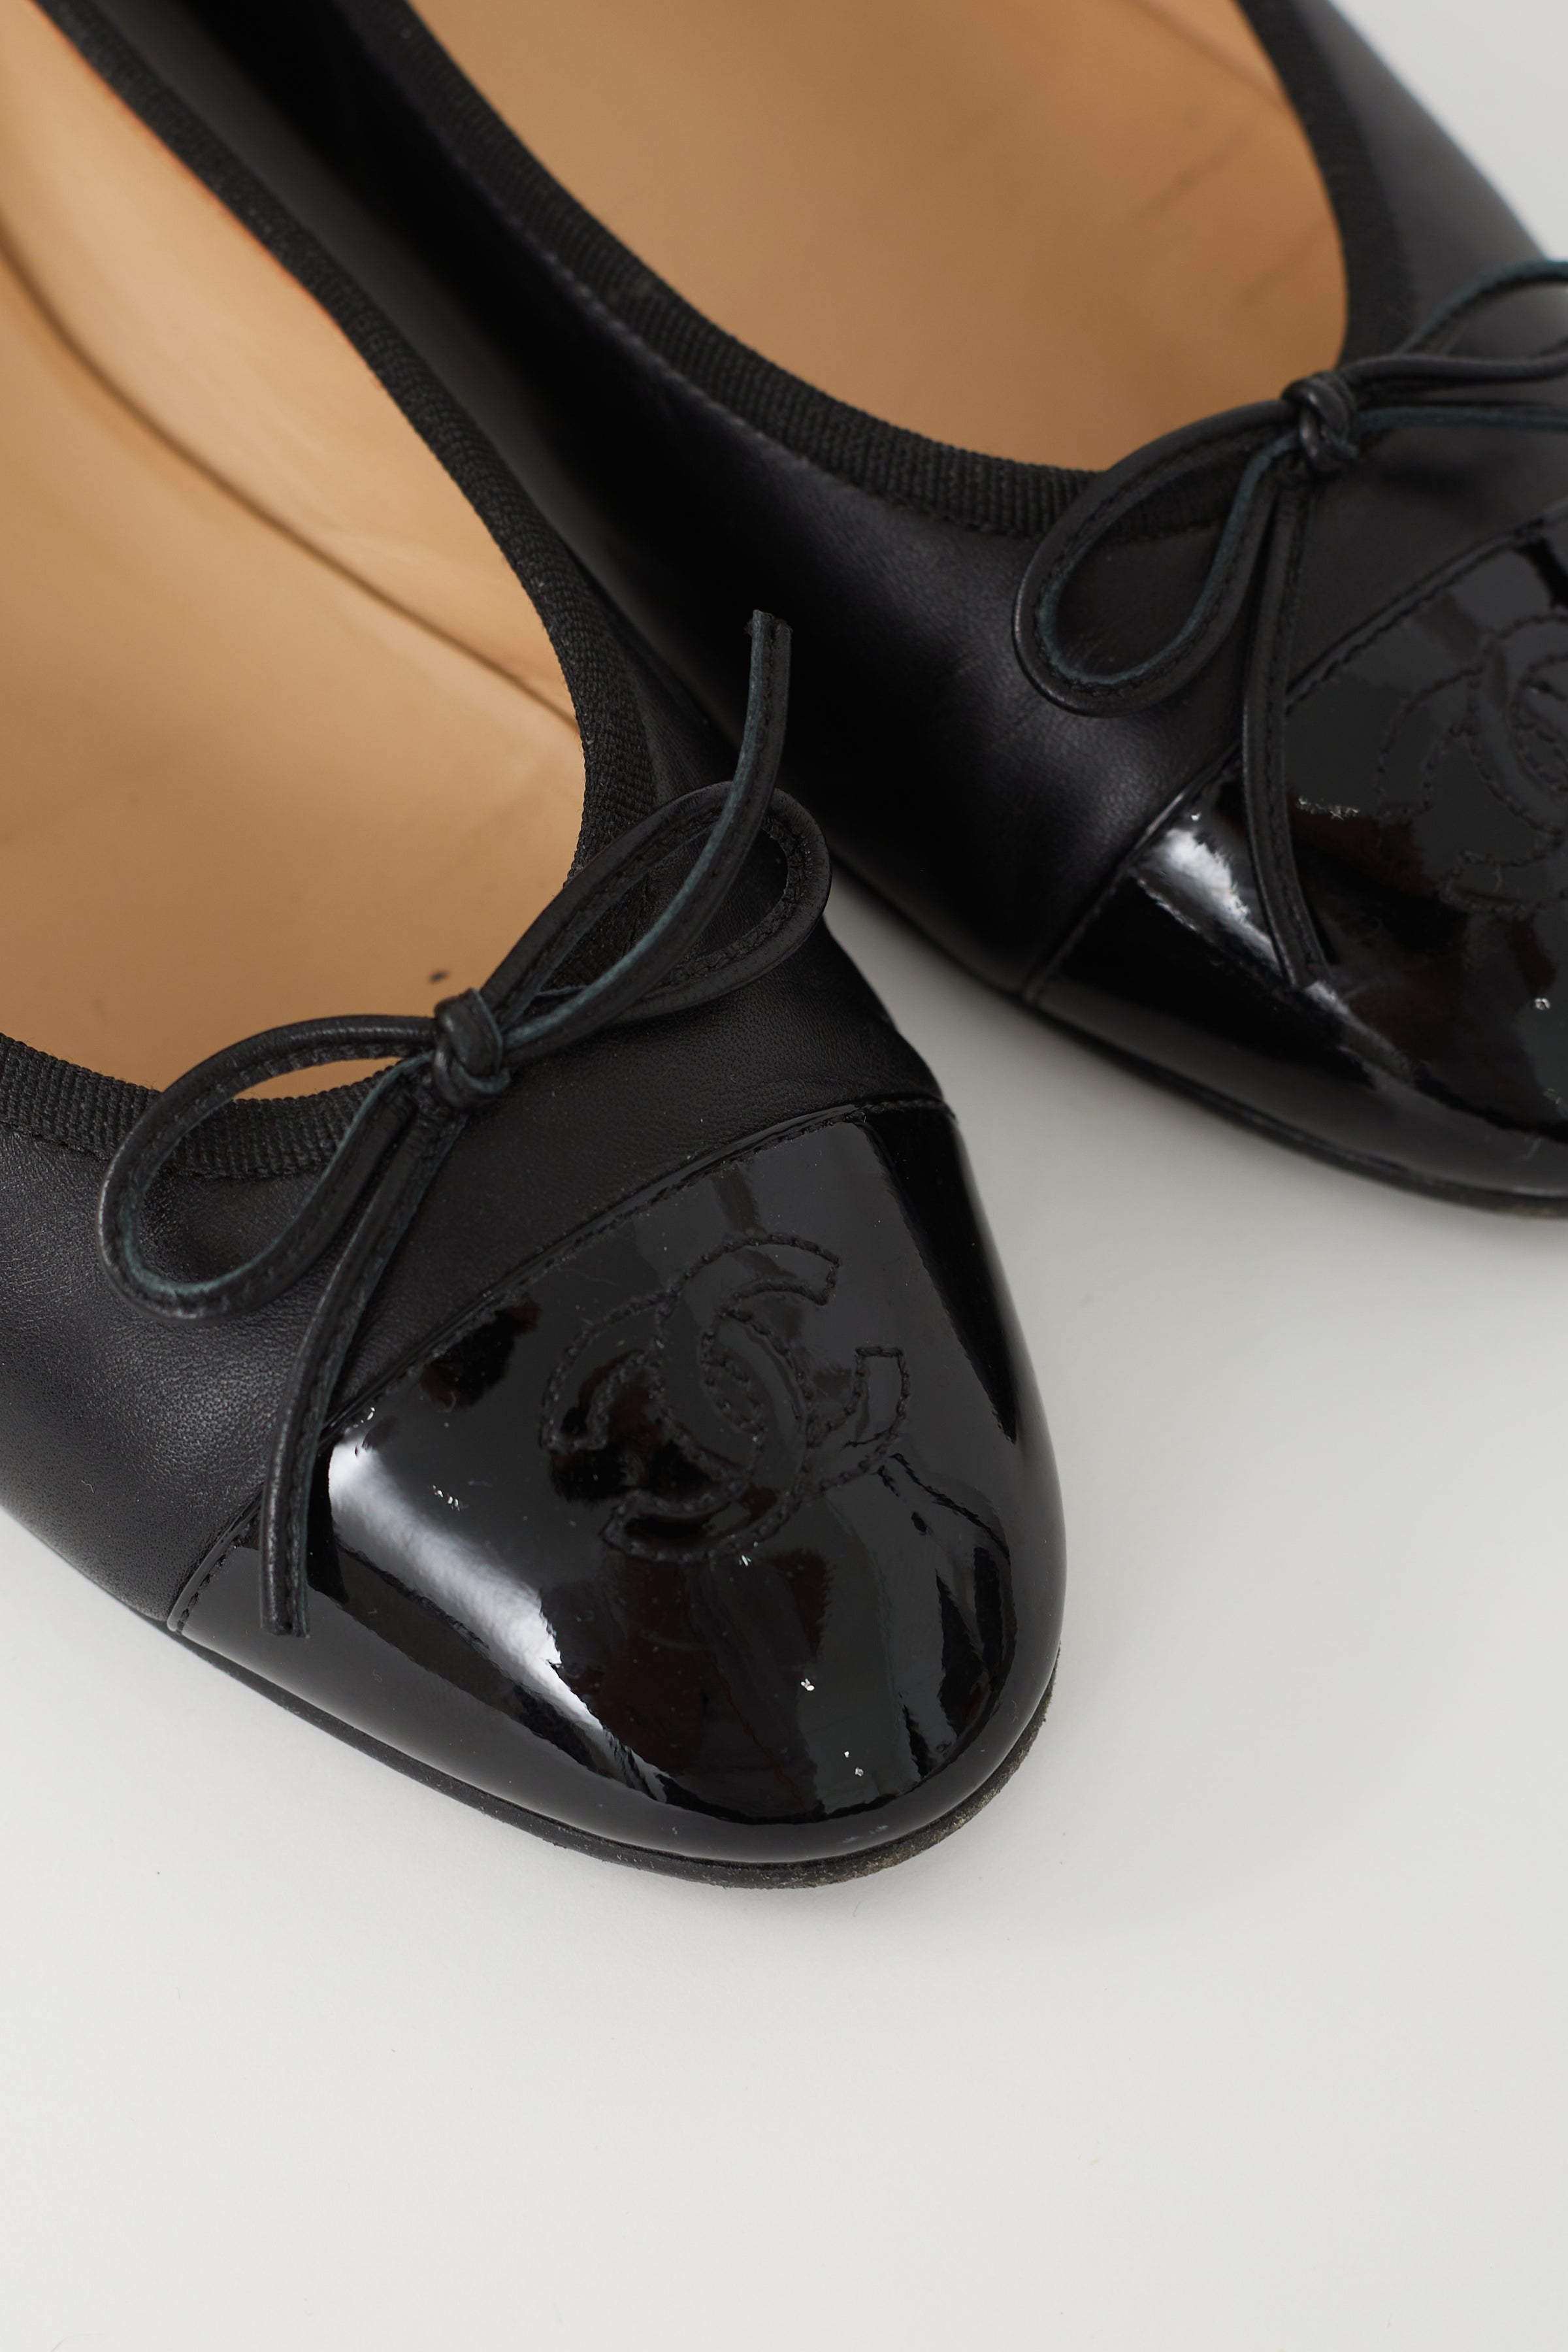 Pre-Owned Chanel Black Size 39.5 Ballet Ballet Flat